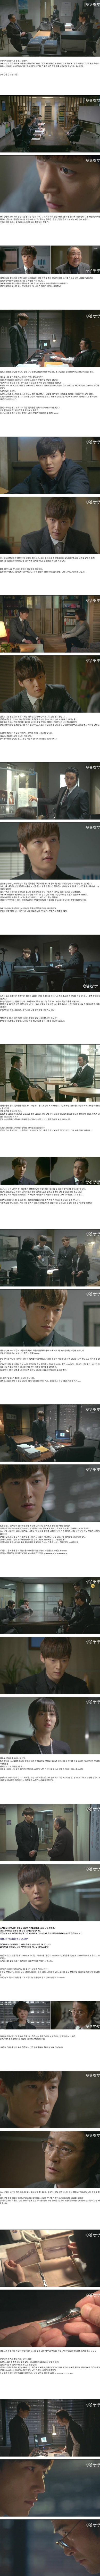 episode 15 captures for the Korean drama 'Pride and Prejudice'